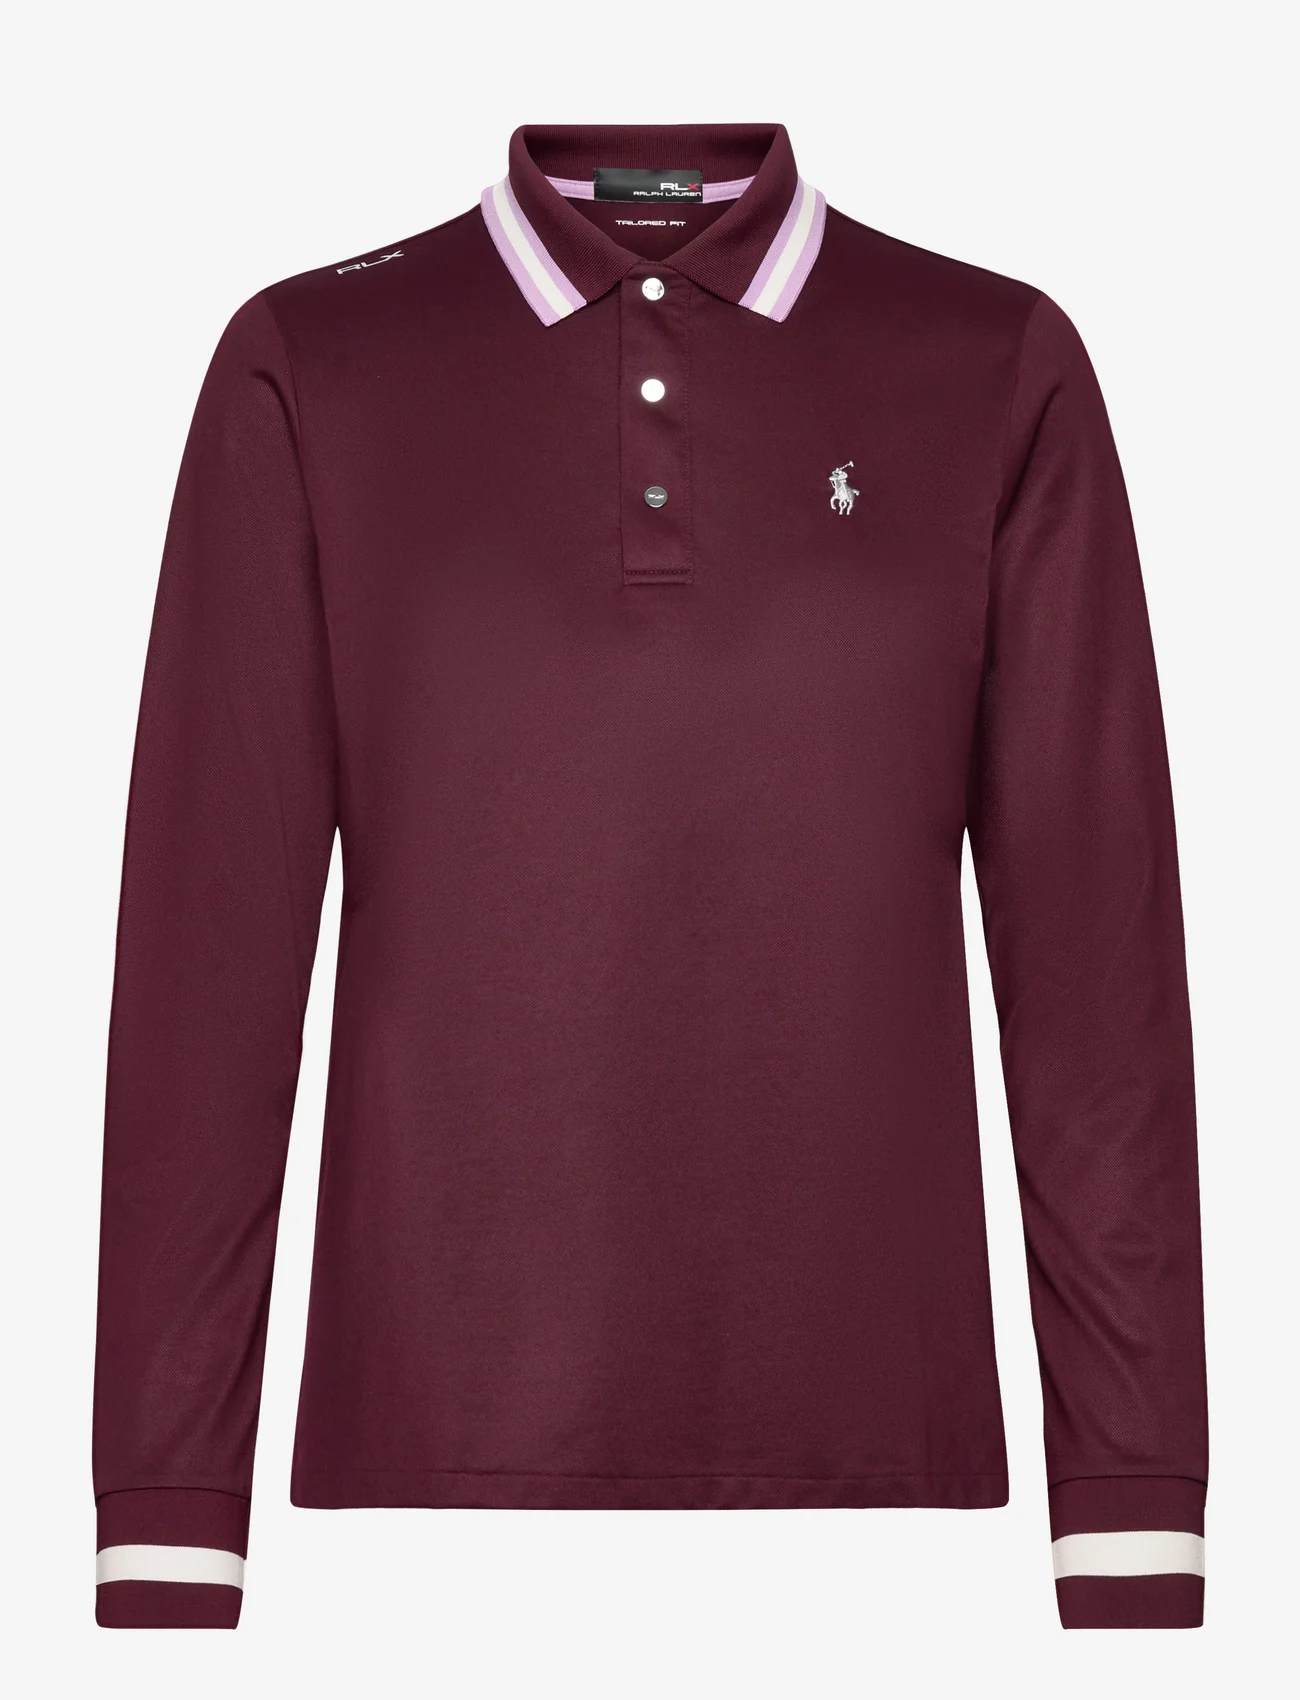 Ralph Lauren Golf - Tailored Fit Long-Sleeve Polo Shirt - harvard wine/lght - 0